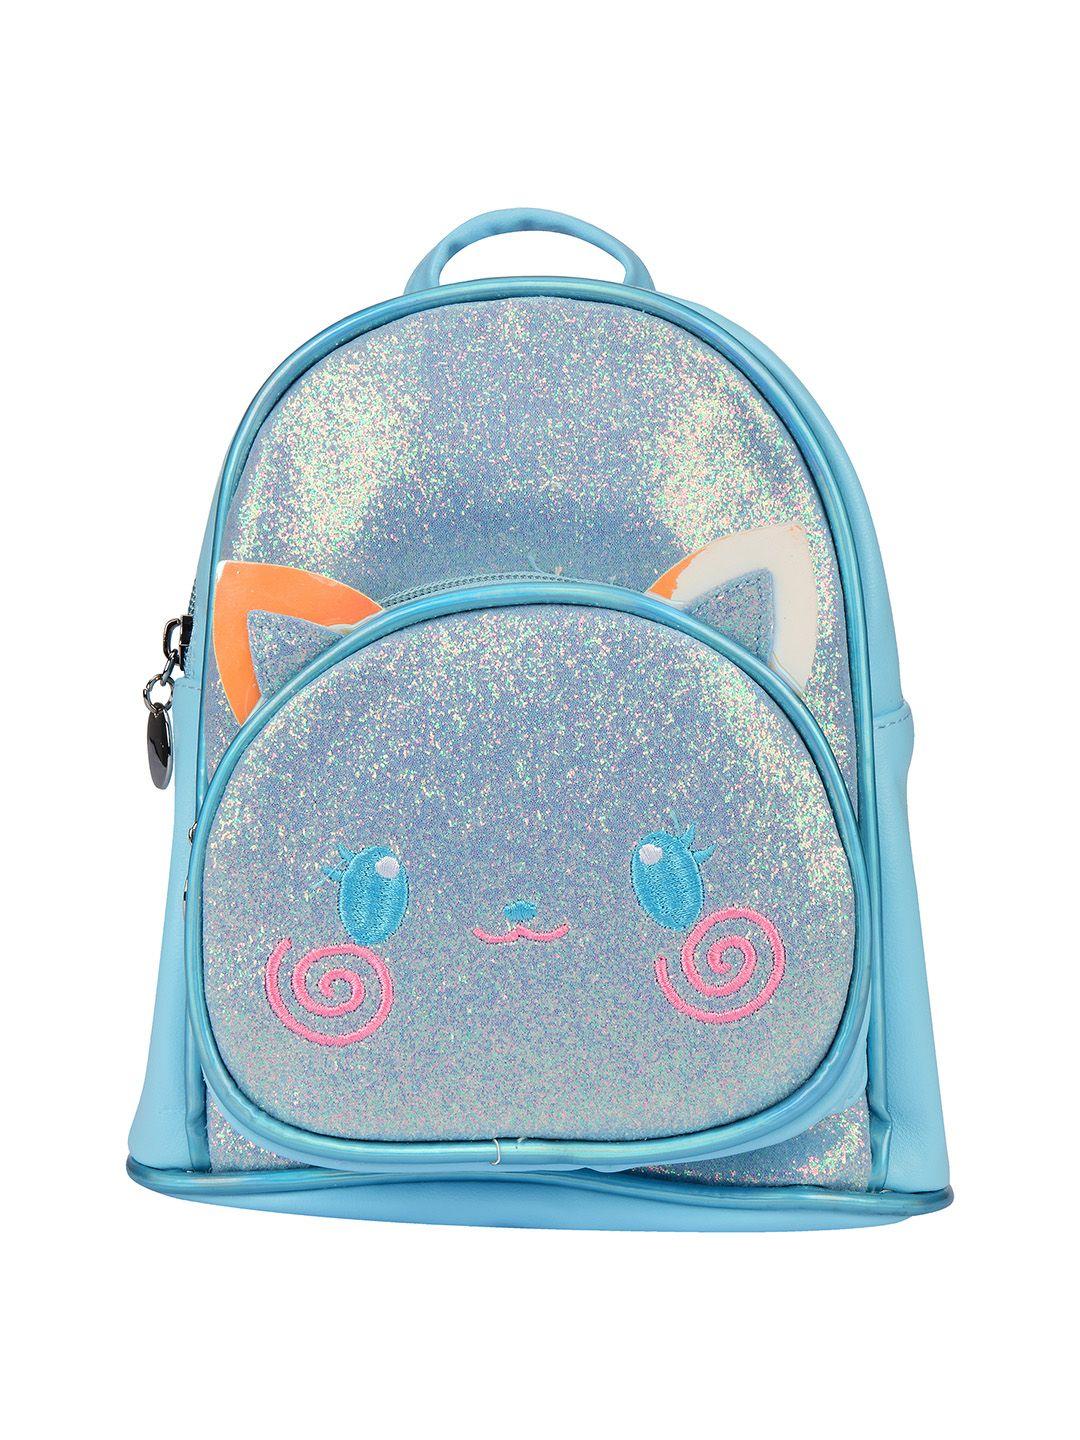 kids on board kids blue glittered 7 inches picnic bag